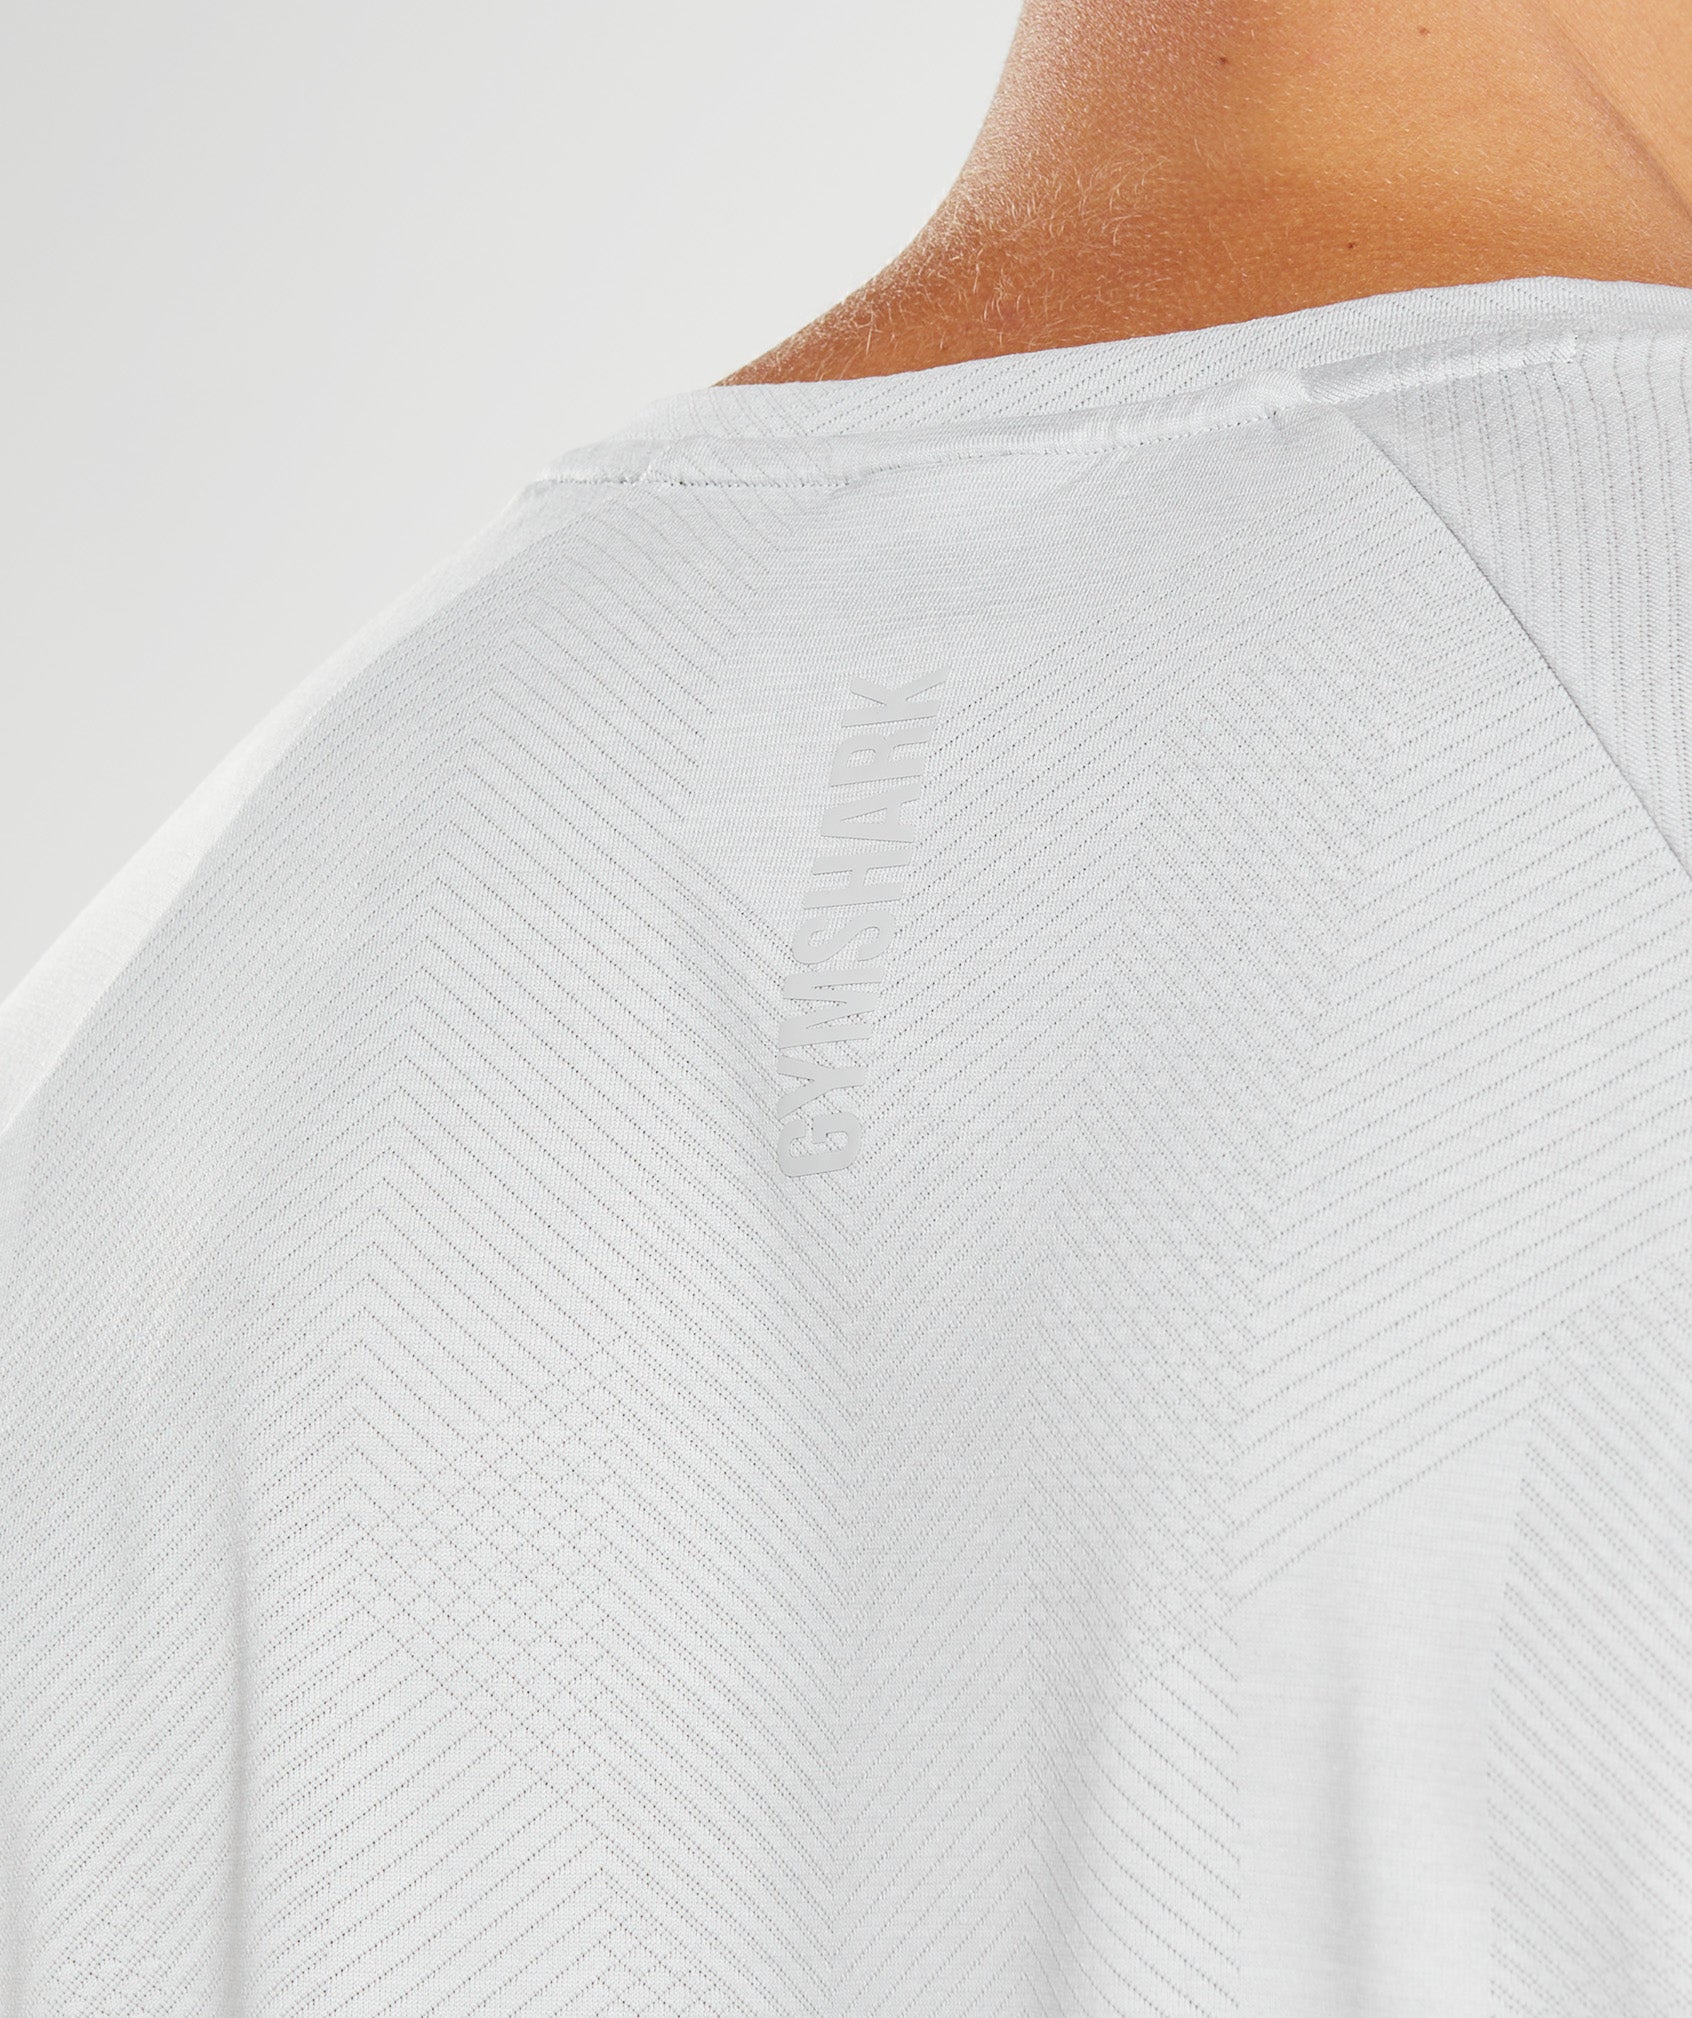 Apex Long Sleeve T-Shirt in Light Grey/White